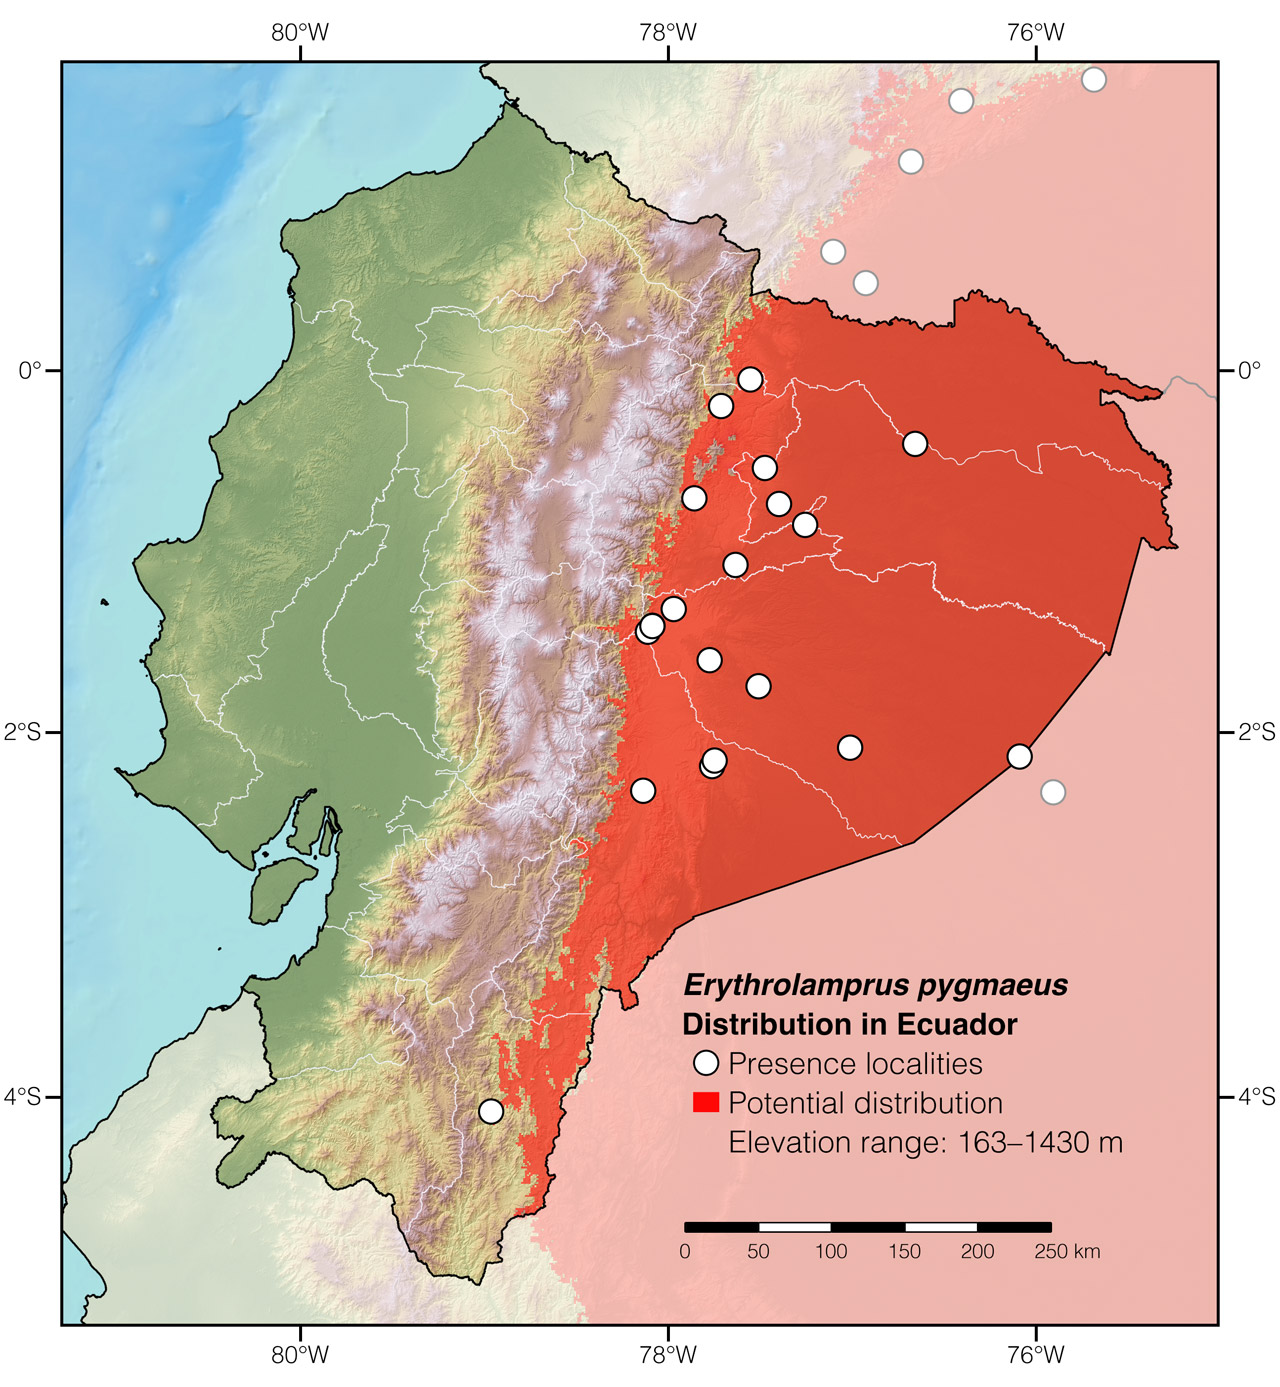 Distribution of Erythrolamprus pygmaeus in Ecuador